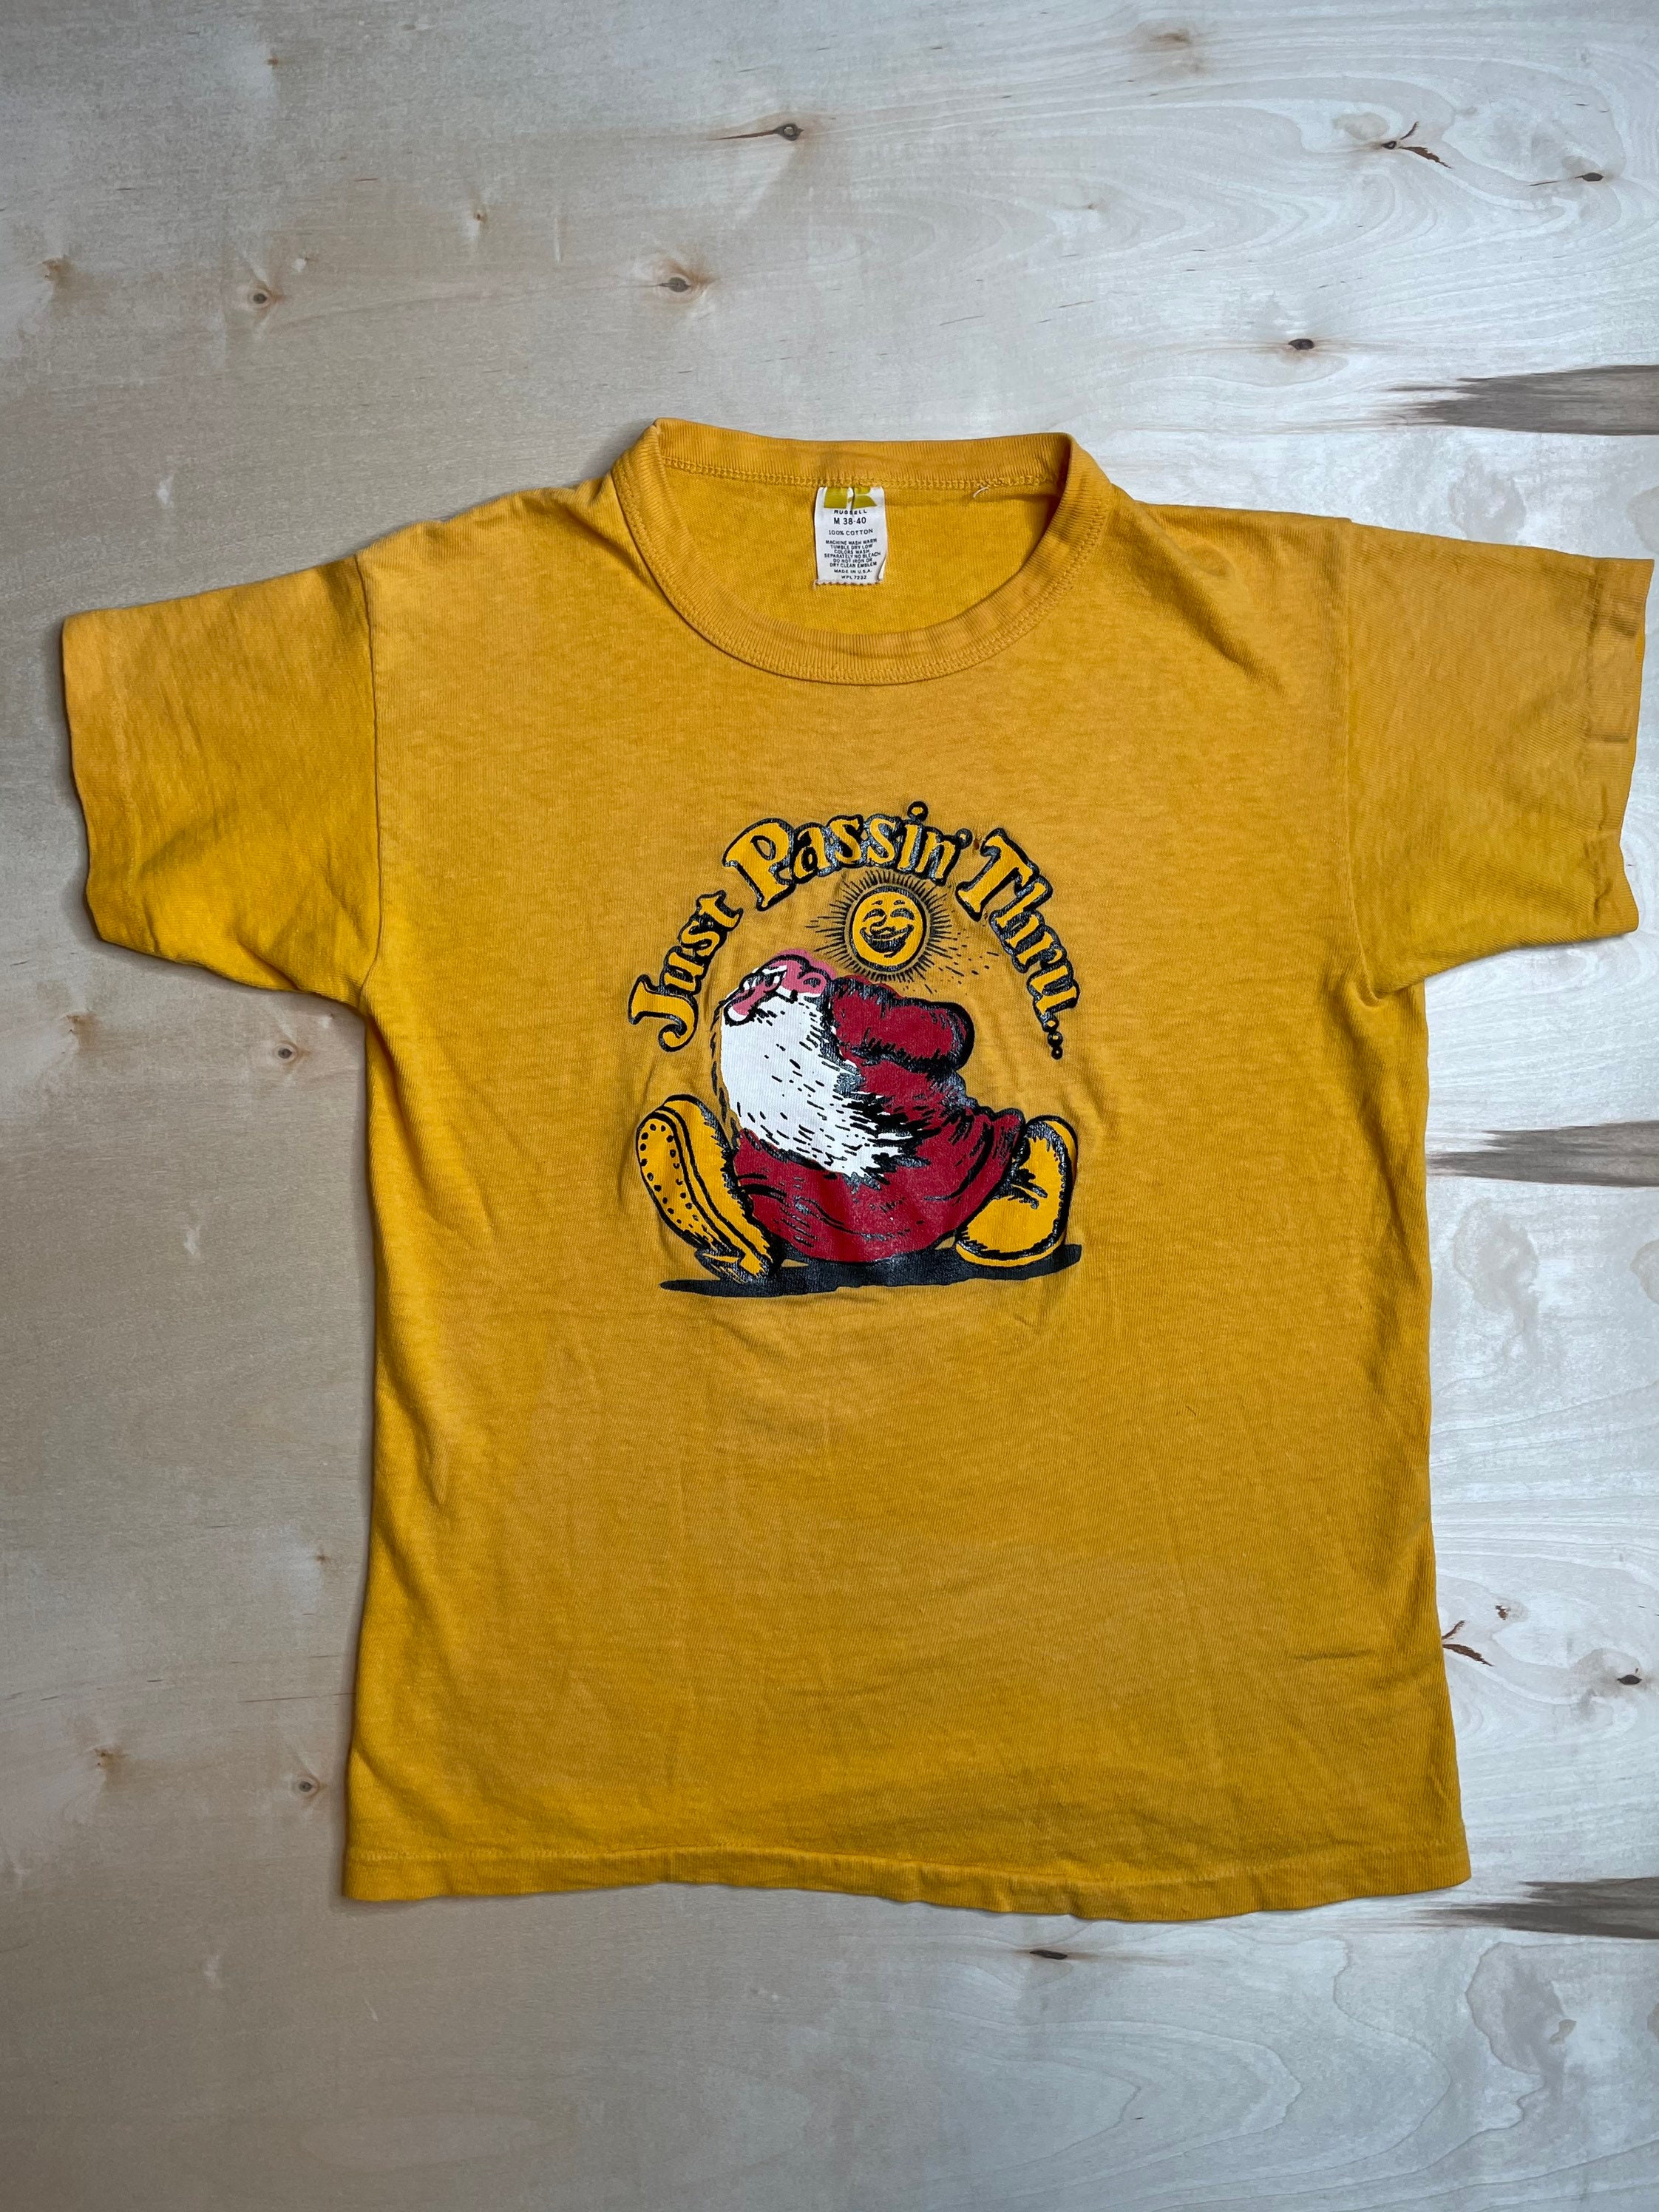 Crumb Shirt 1960s or 1970s OG - Etsy